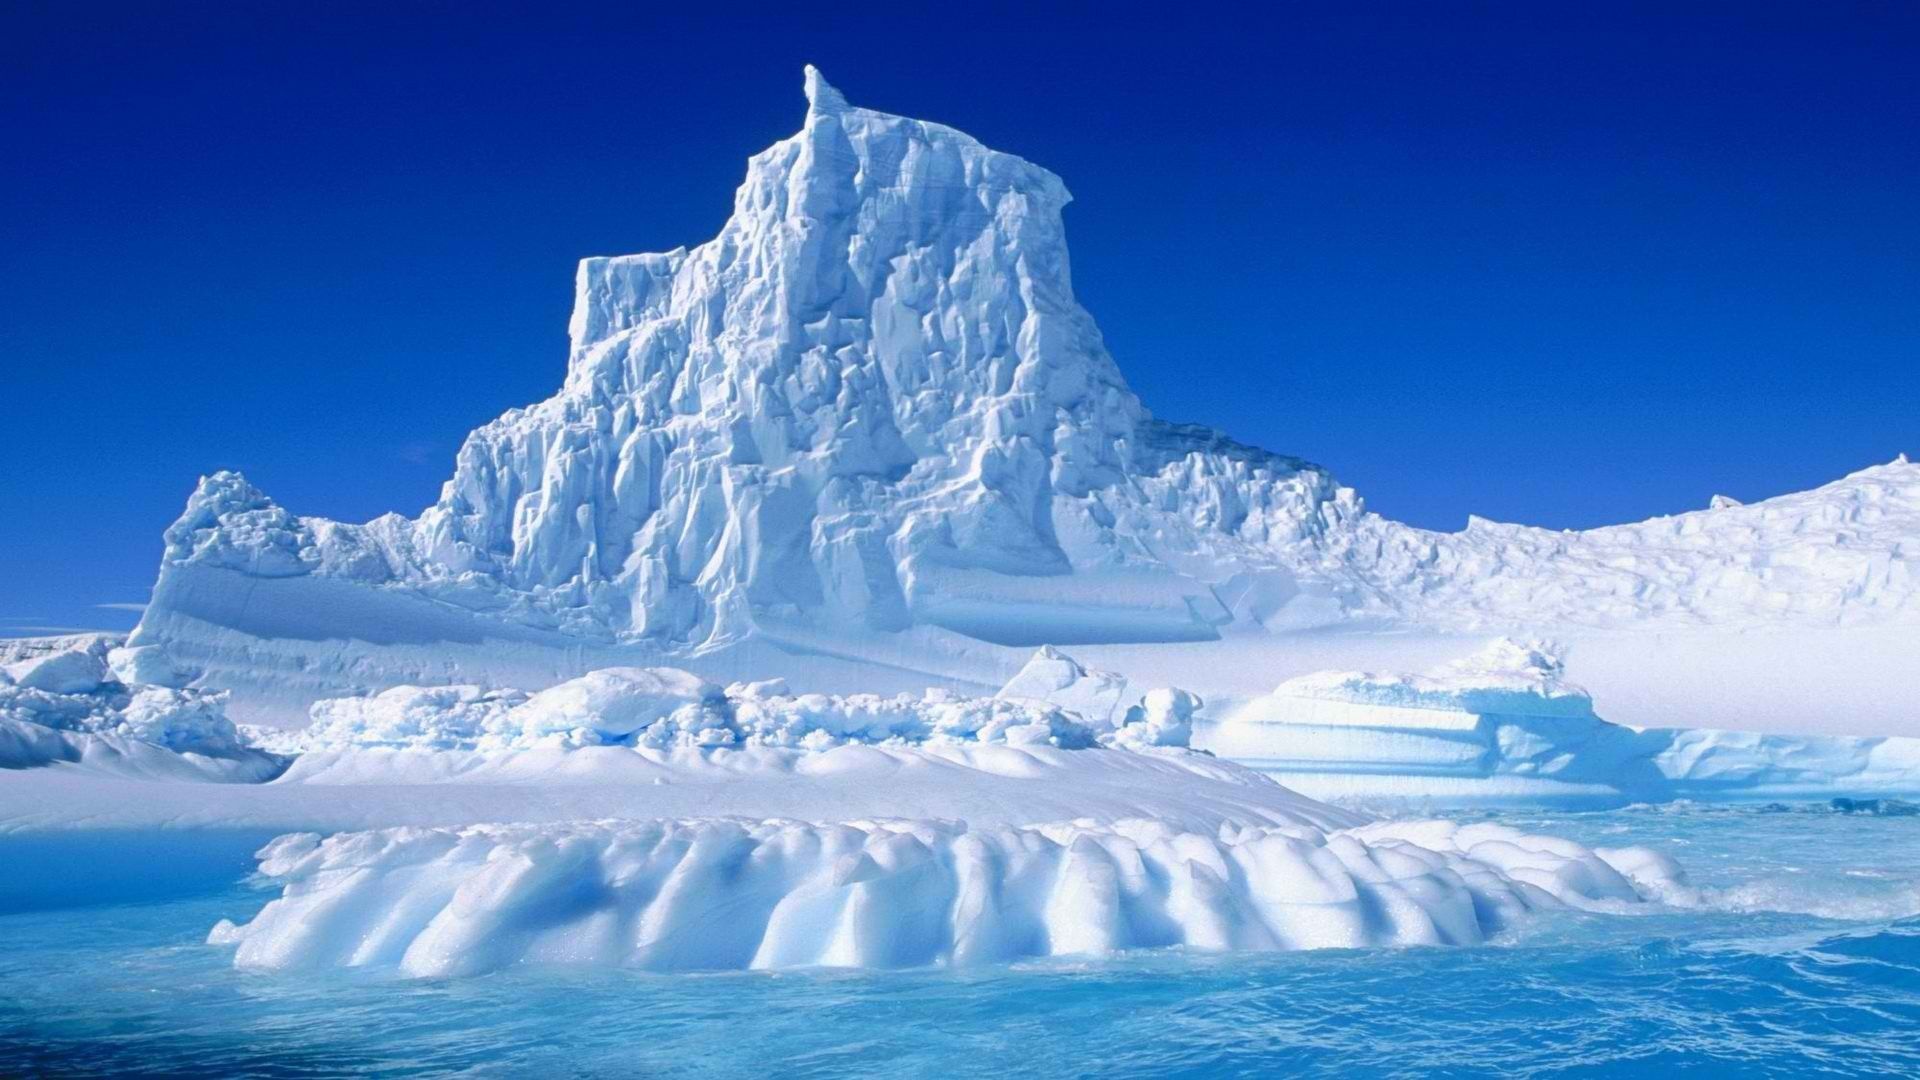 антарктида